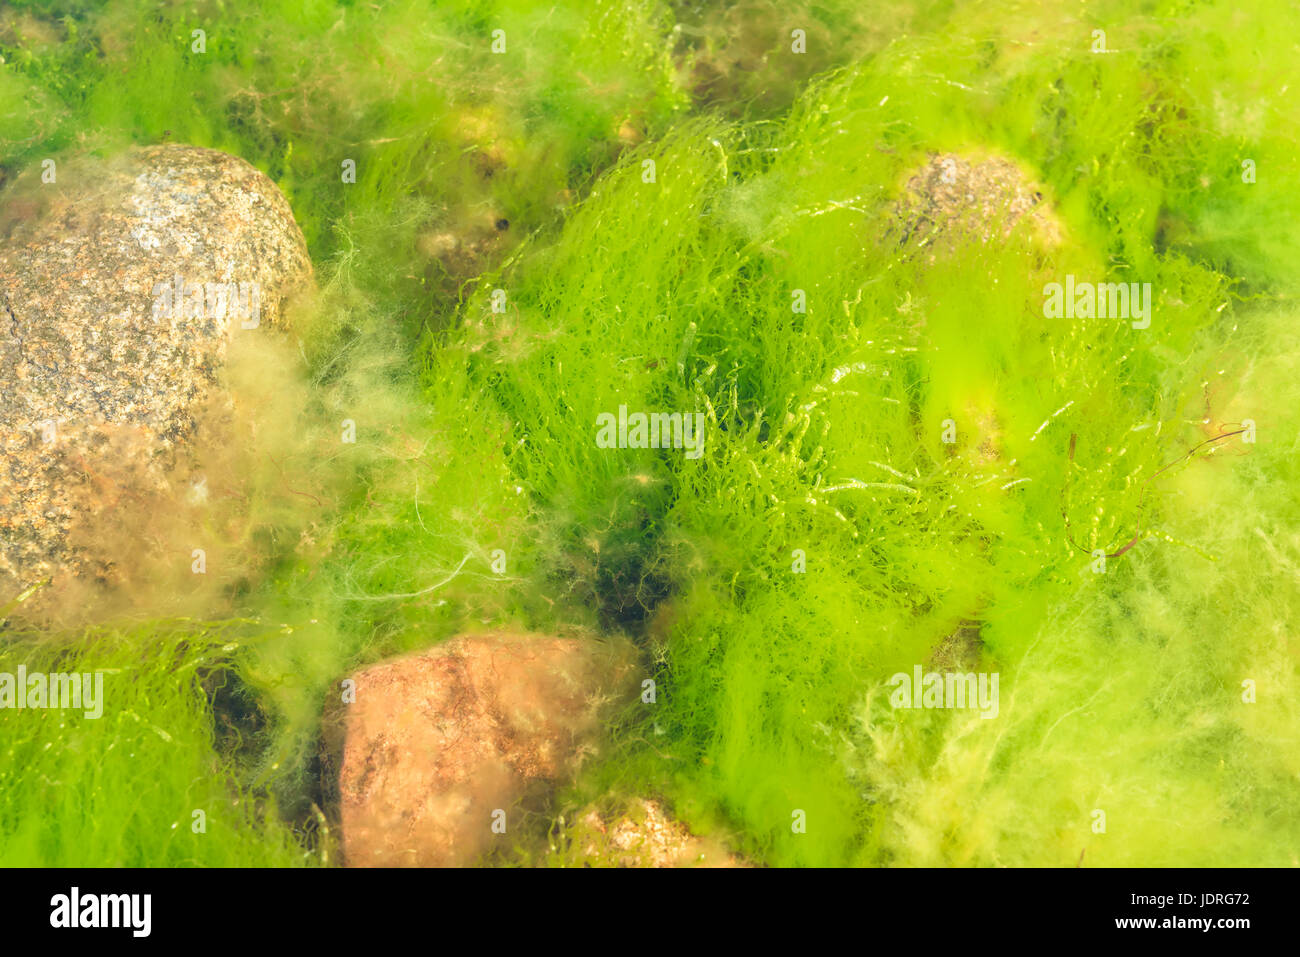 Fresco e verde gutweed o erba kelp (Ulva intestinalis) tra massi. Foto Stock